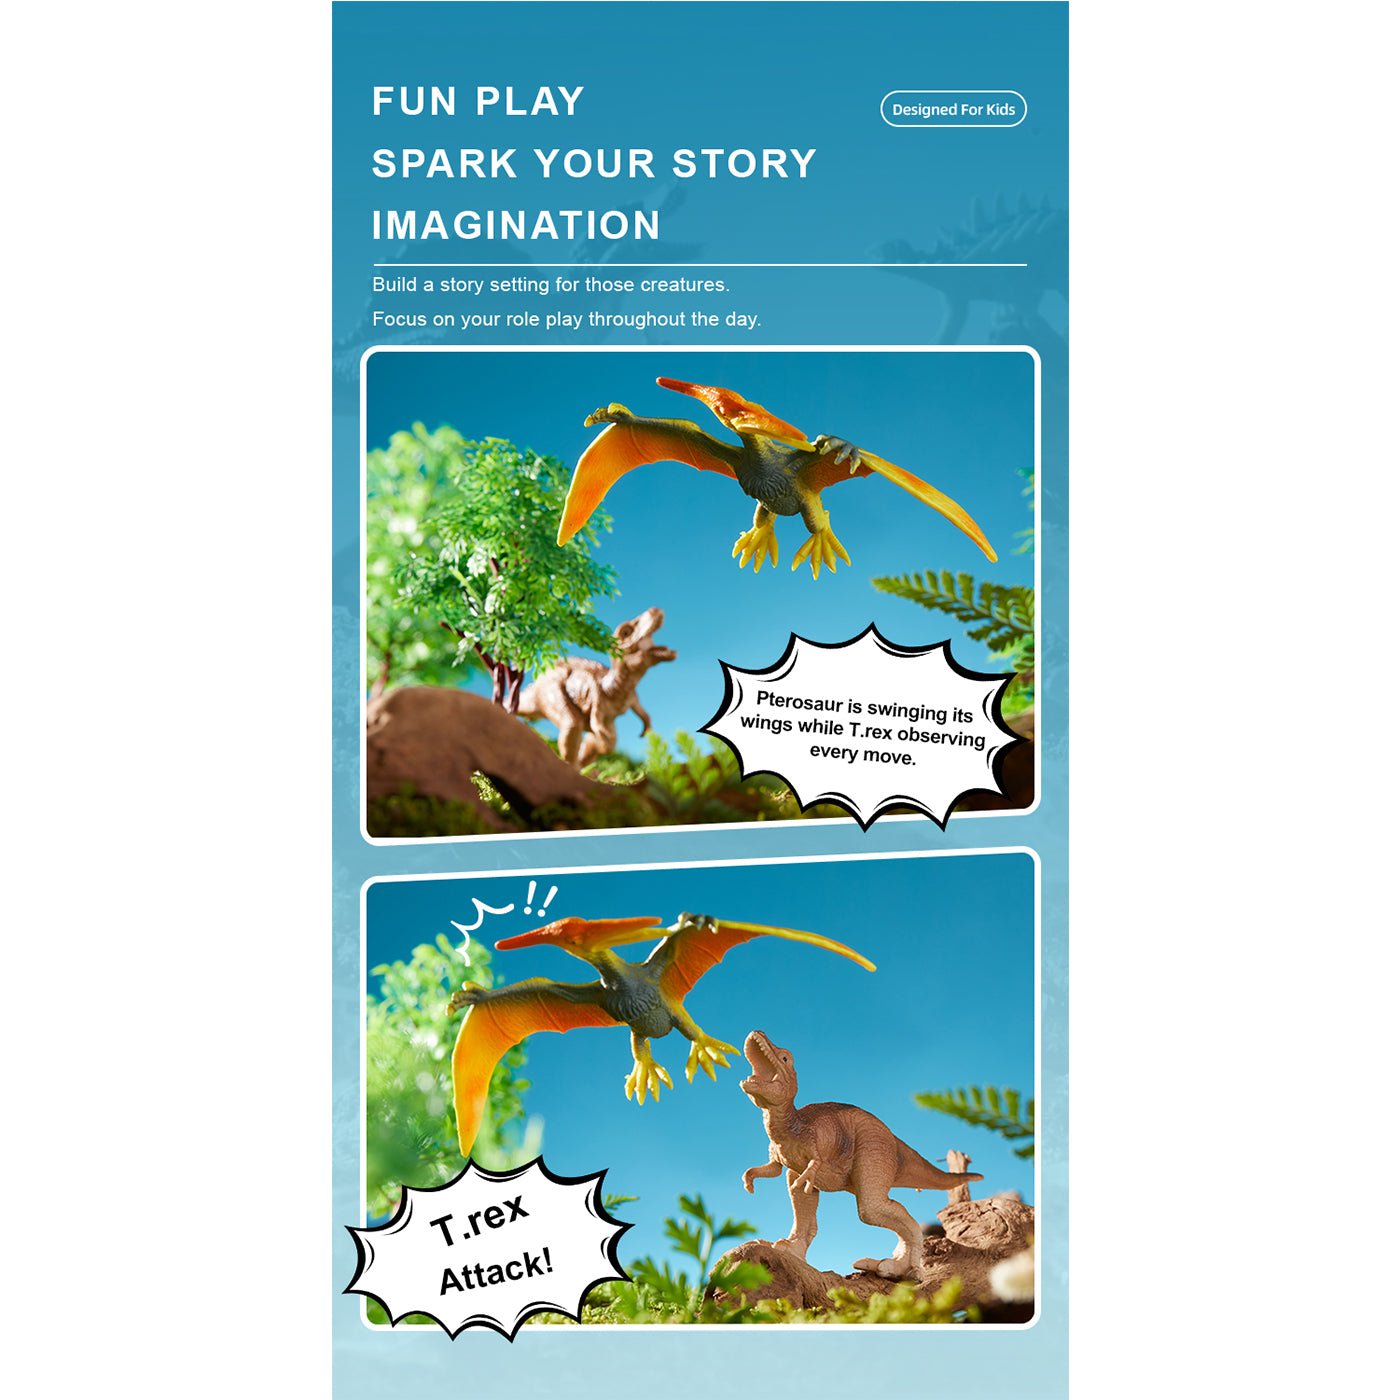 Simulation Toy Set - Dinosaur World - 0cm